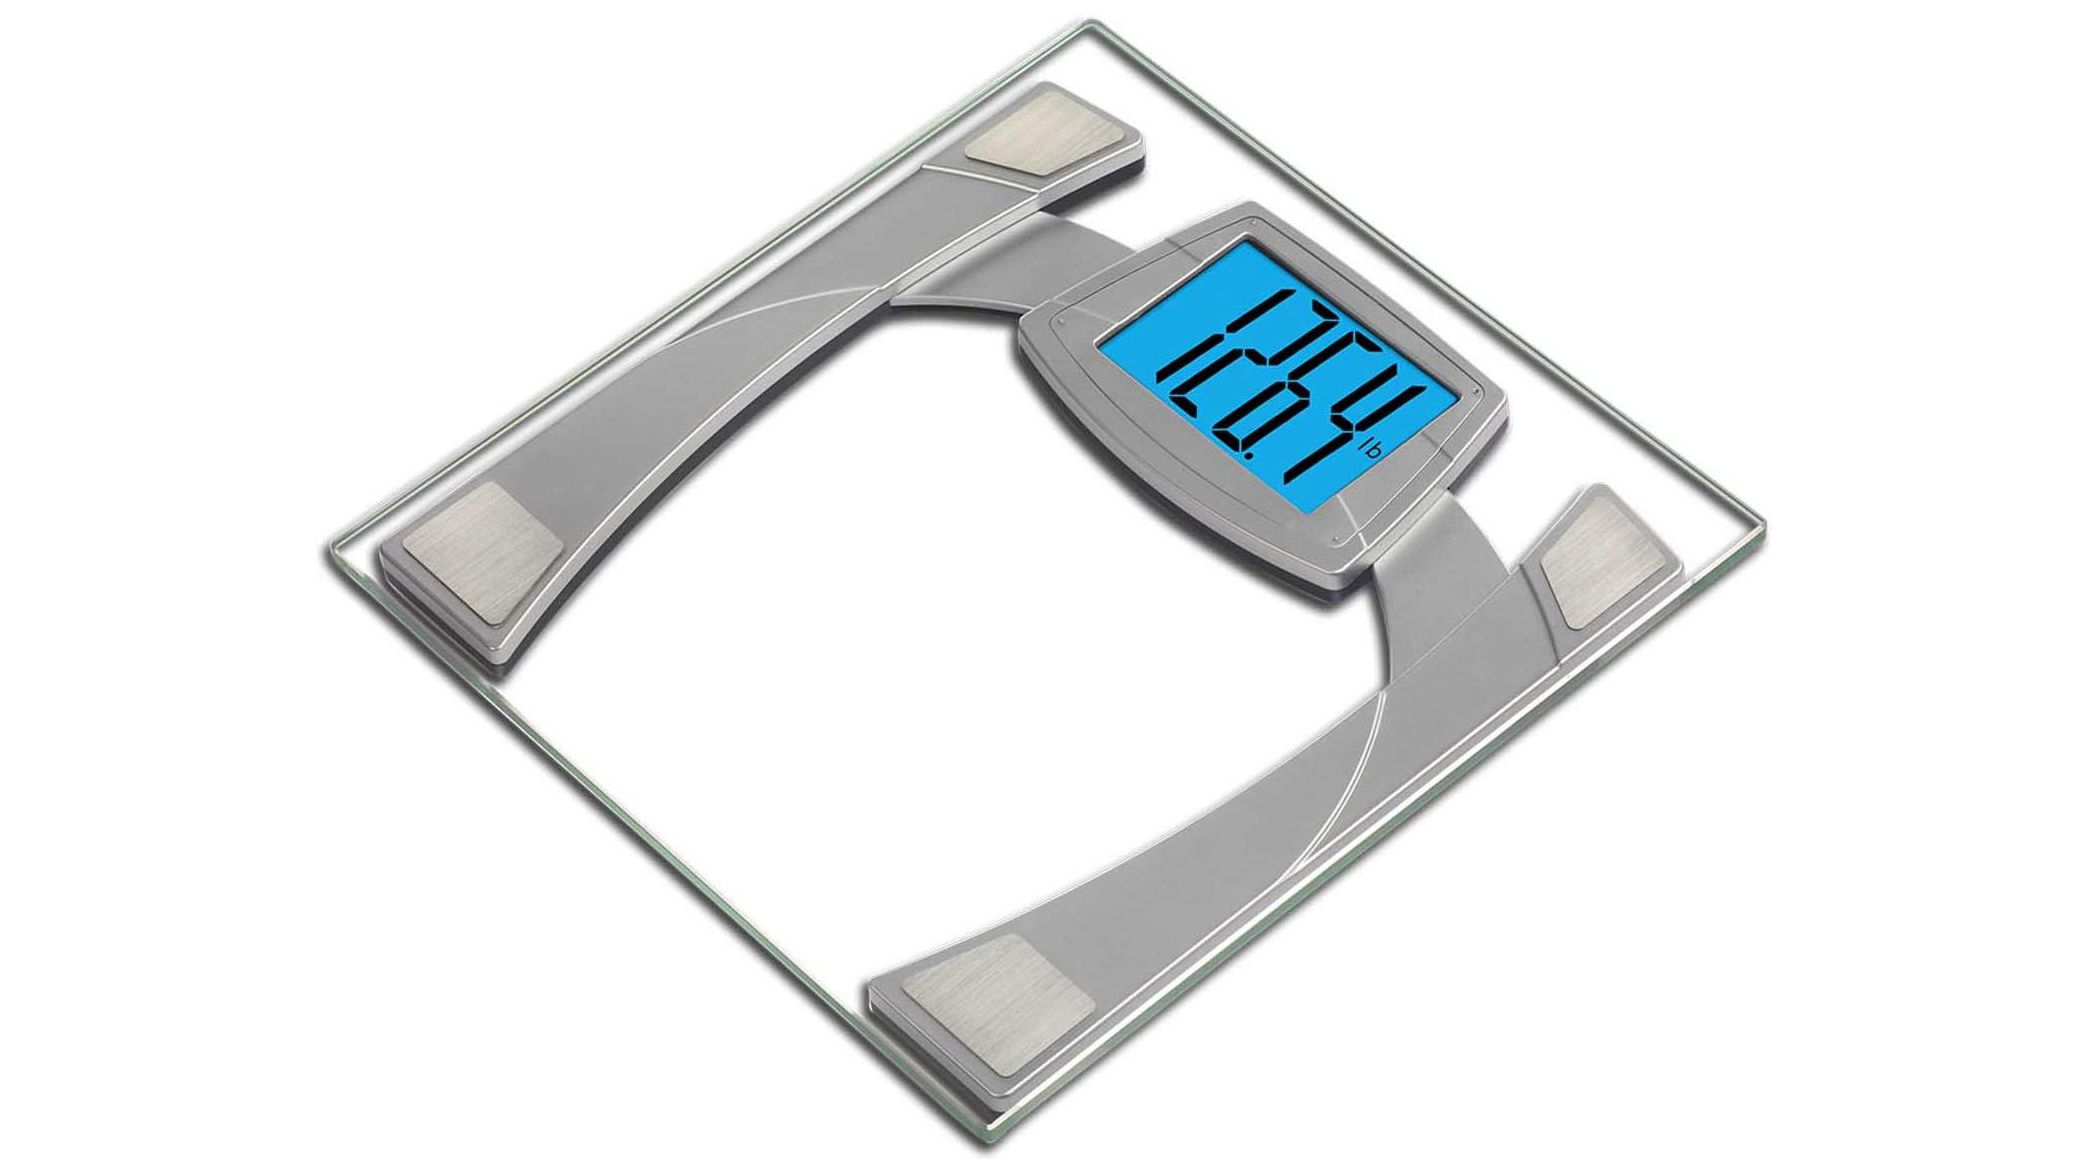 Eat Smart Precision Body Scale, Composition Digital Body Fat Scale